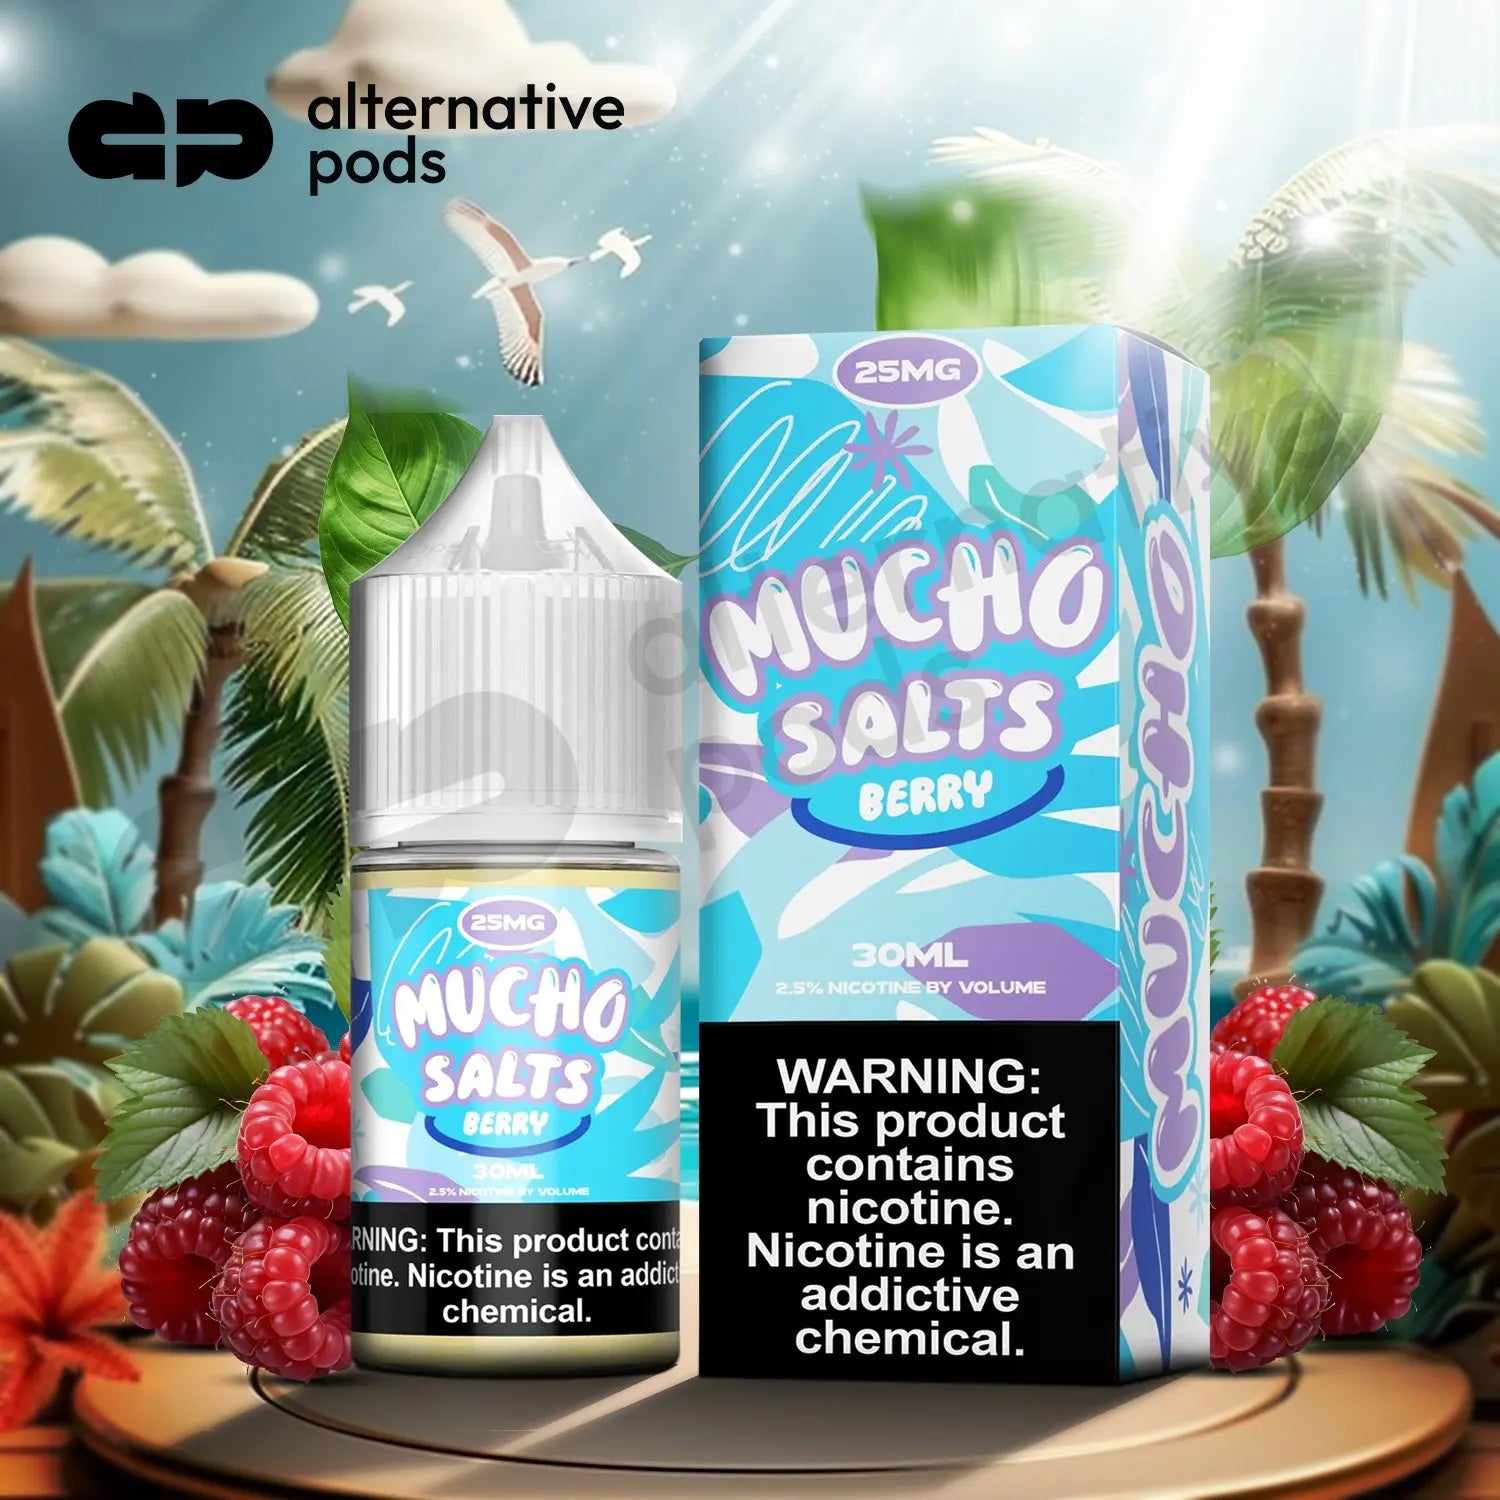 Mucho Salts Nicotine Salt E-Liquid 30ML - Alternative pods | Online Vape & Smoke Shop